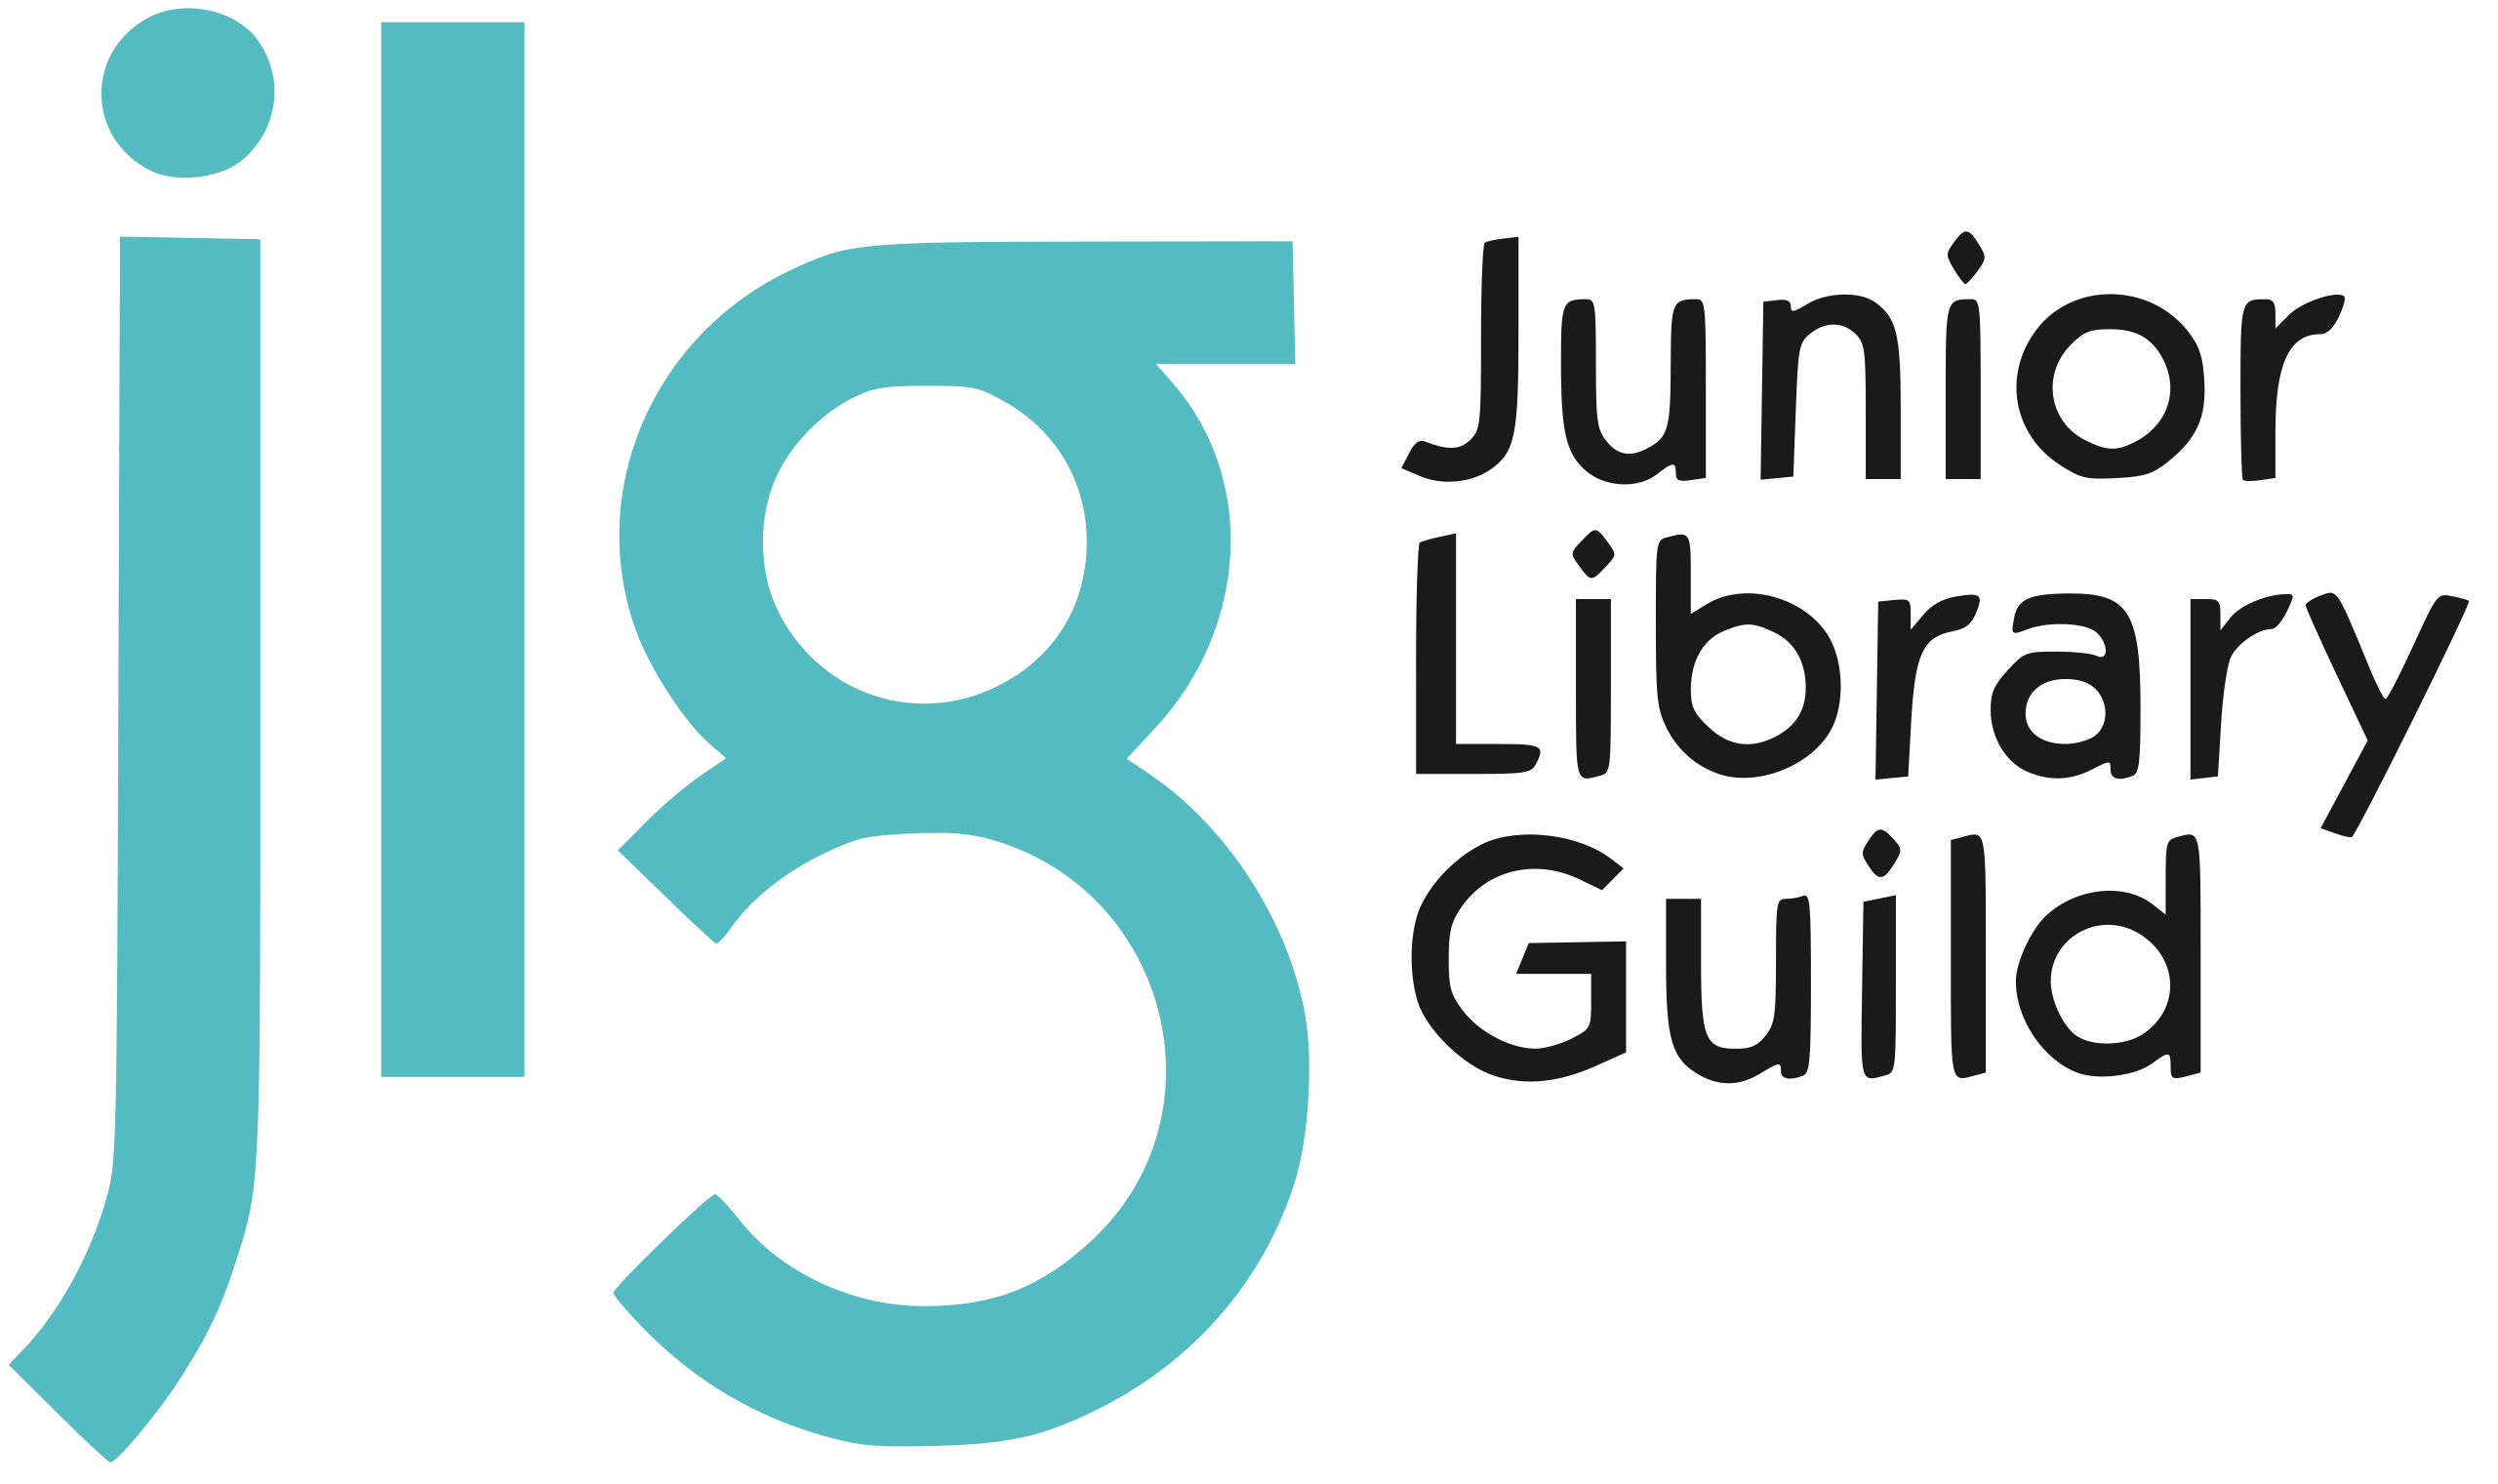 Junior_Library_Guild_logo.svg